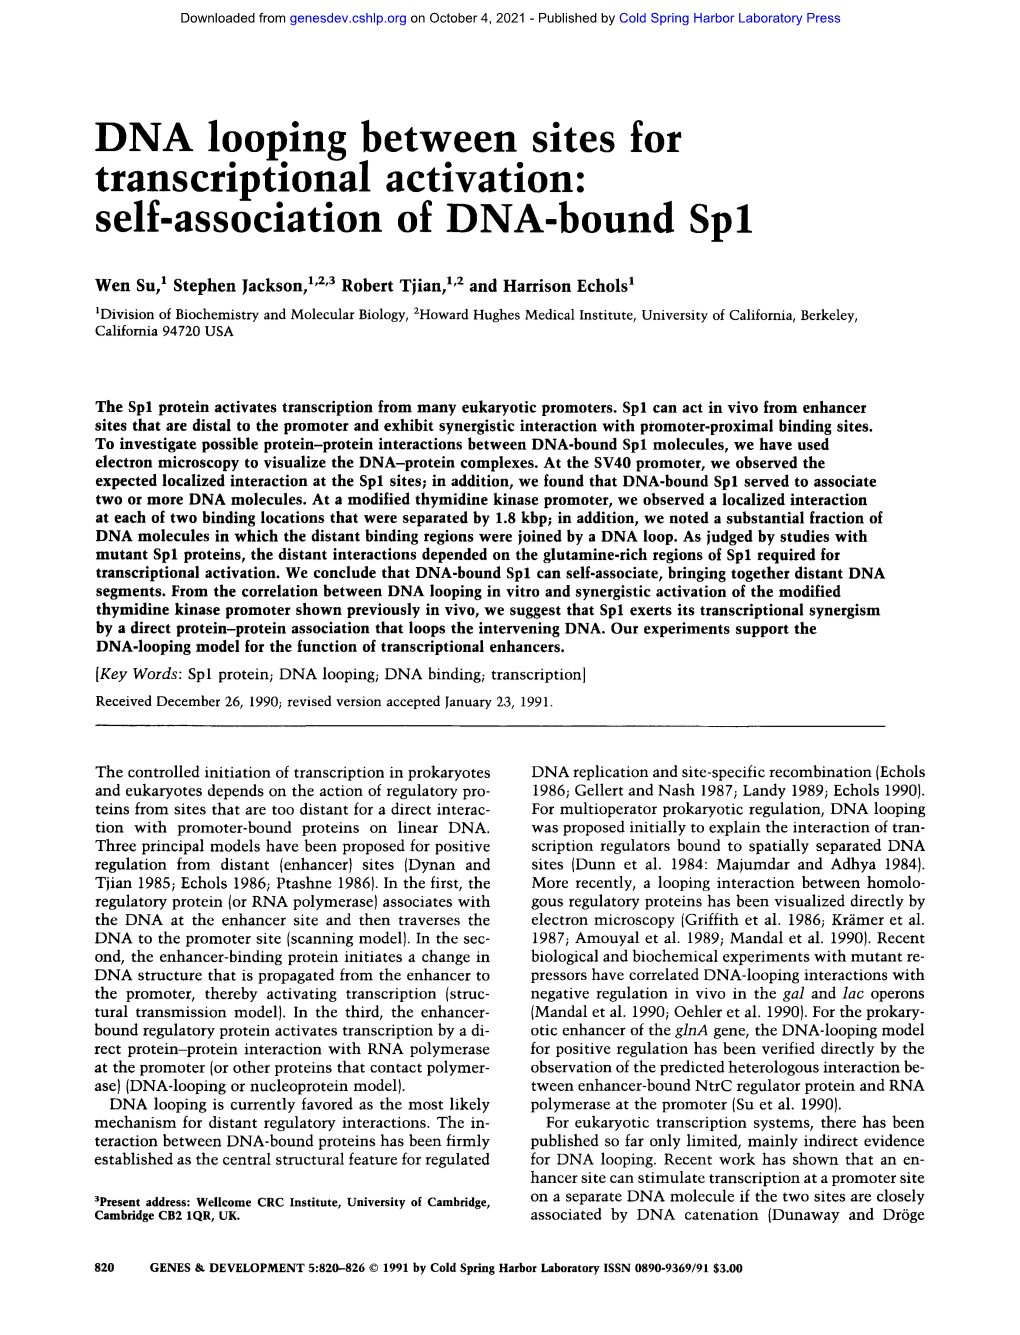 DNA Looping Between Sites for Transcriptional Activation: Self-Association of DNA-Bound Spl